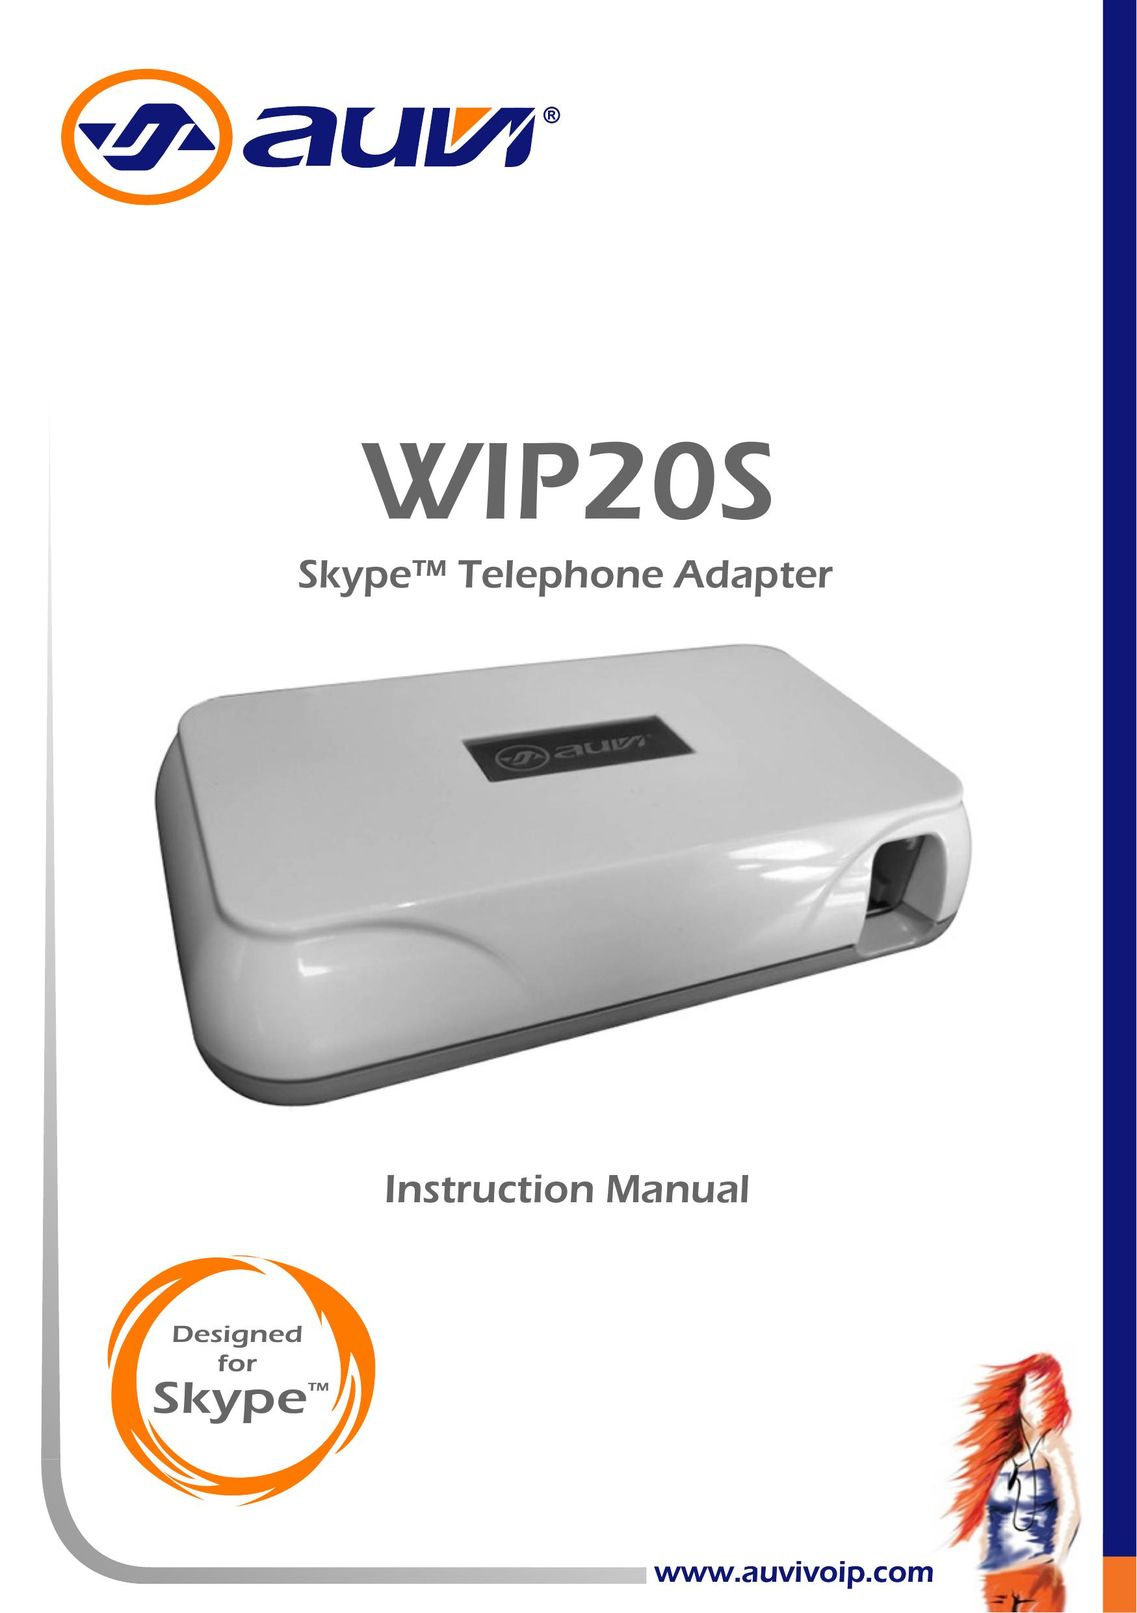 AUVI Technologies WIP20S Telephone Accessories User Manual